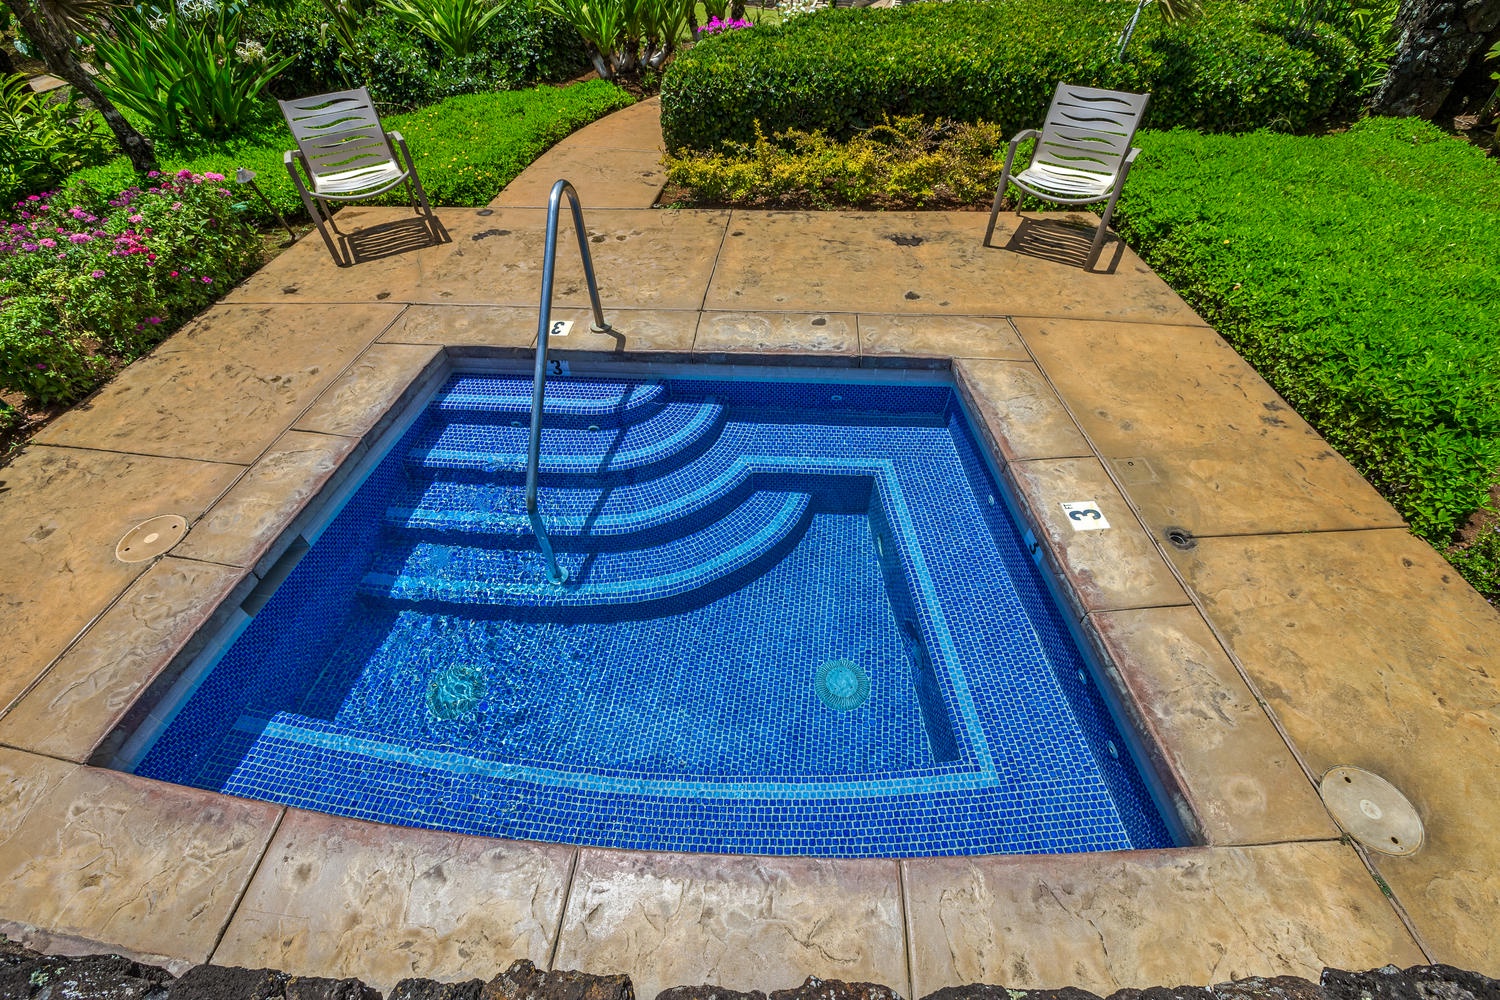 Princeville Vacation Rentals, Leilani Villa - Community hot tub